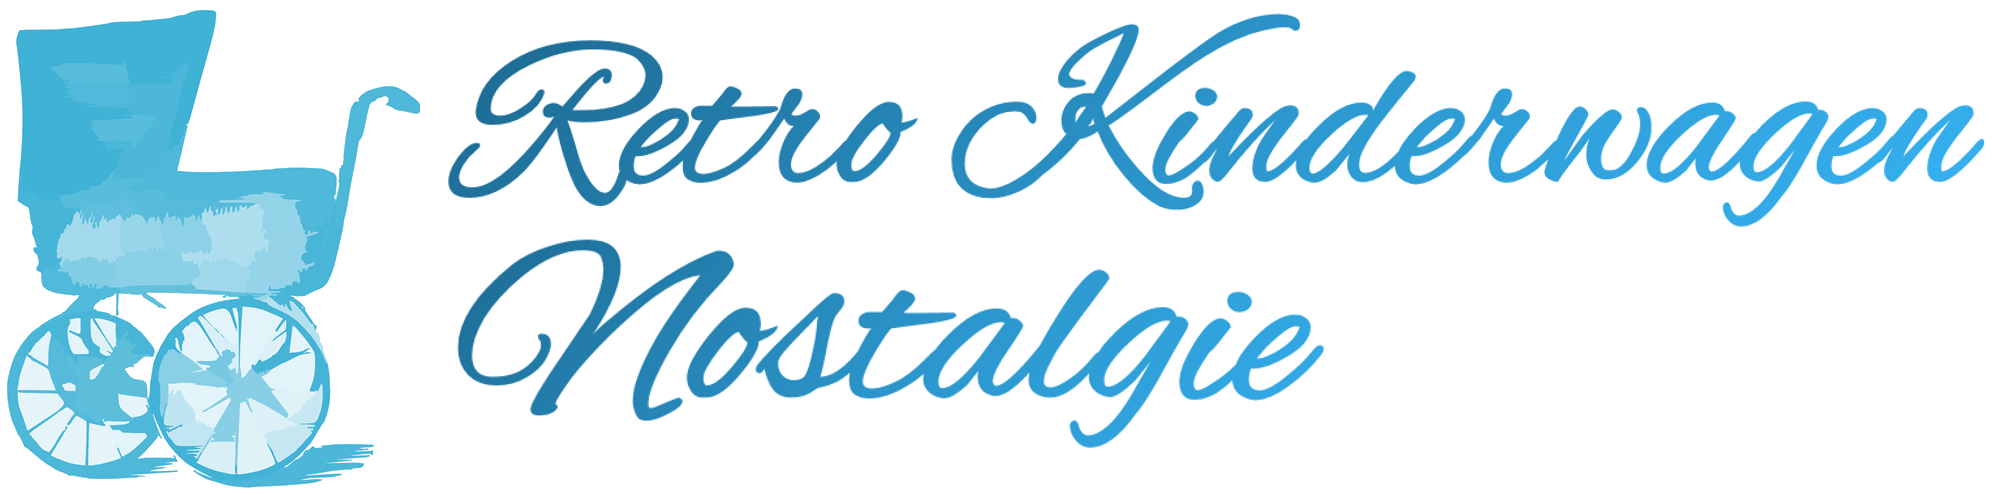 retro kinderwagen nostalgie logo